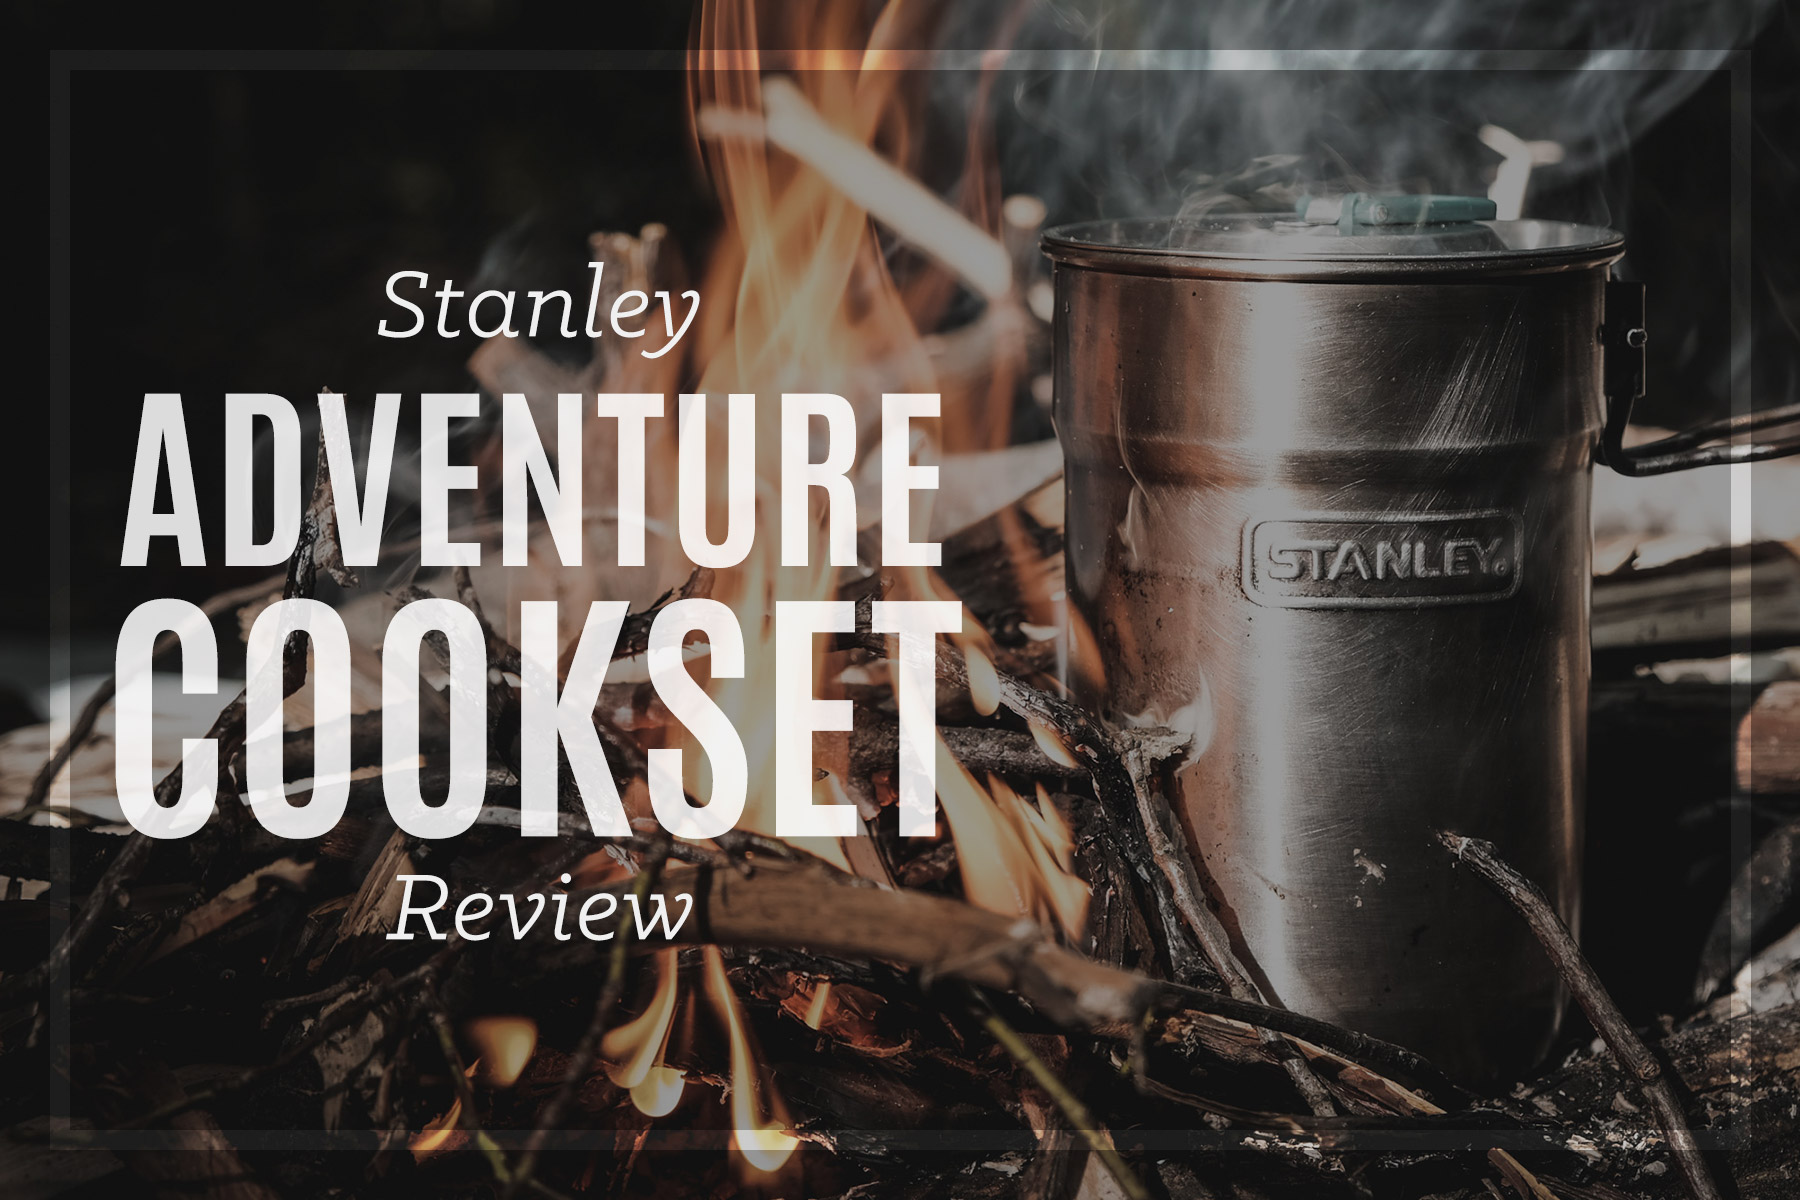 Stanley Adventure Compact Cook Set